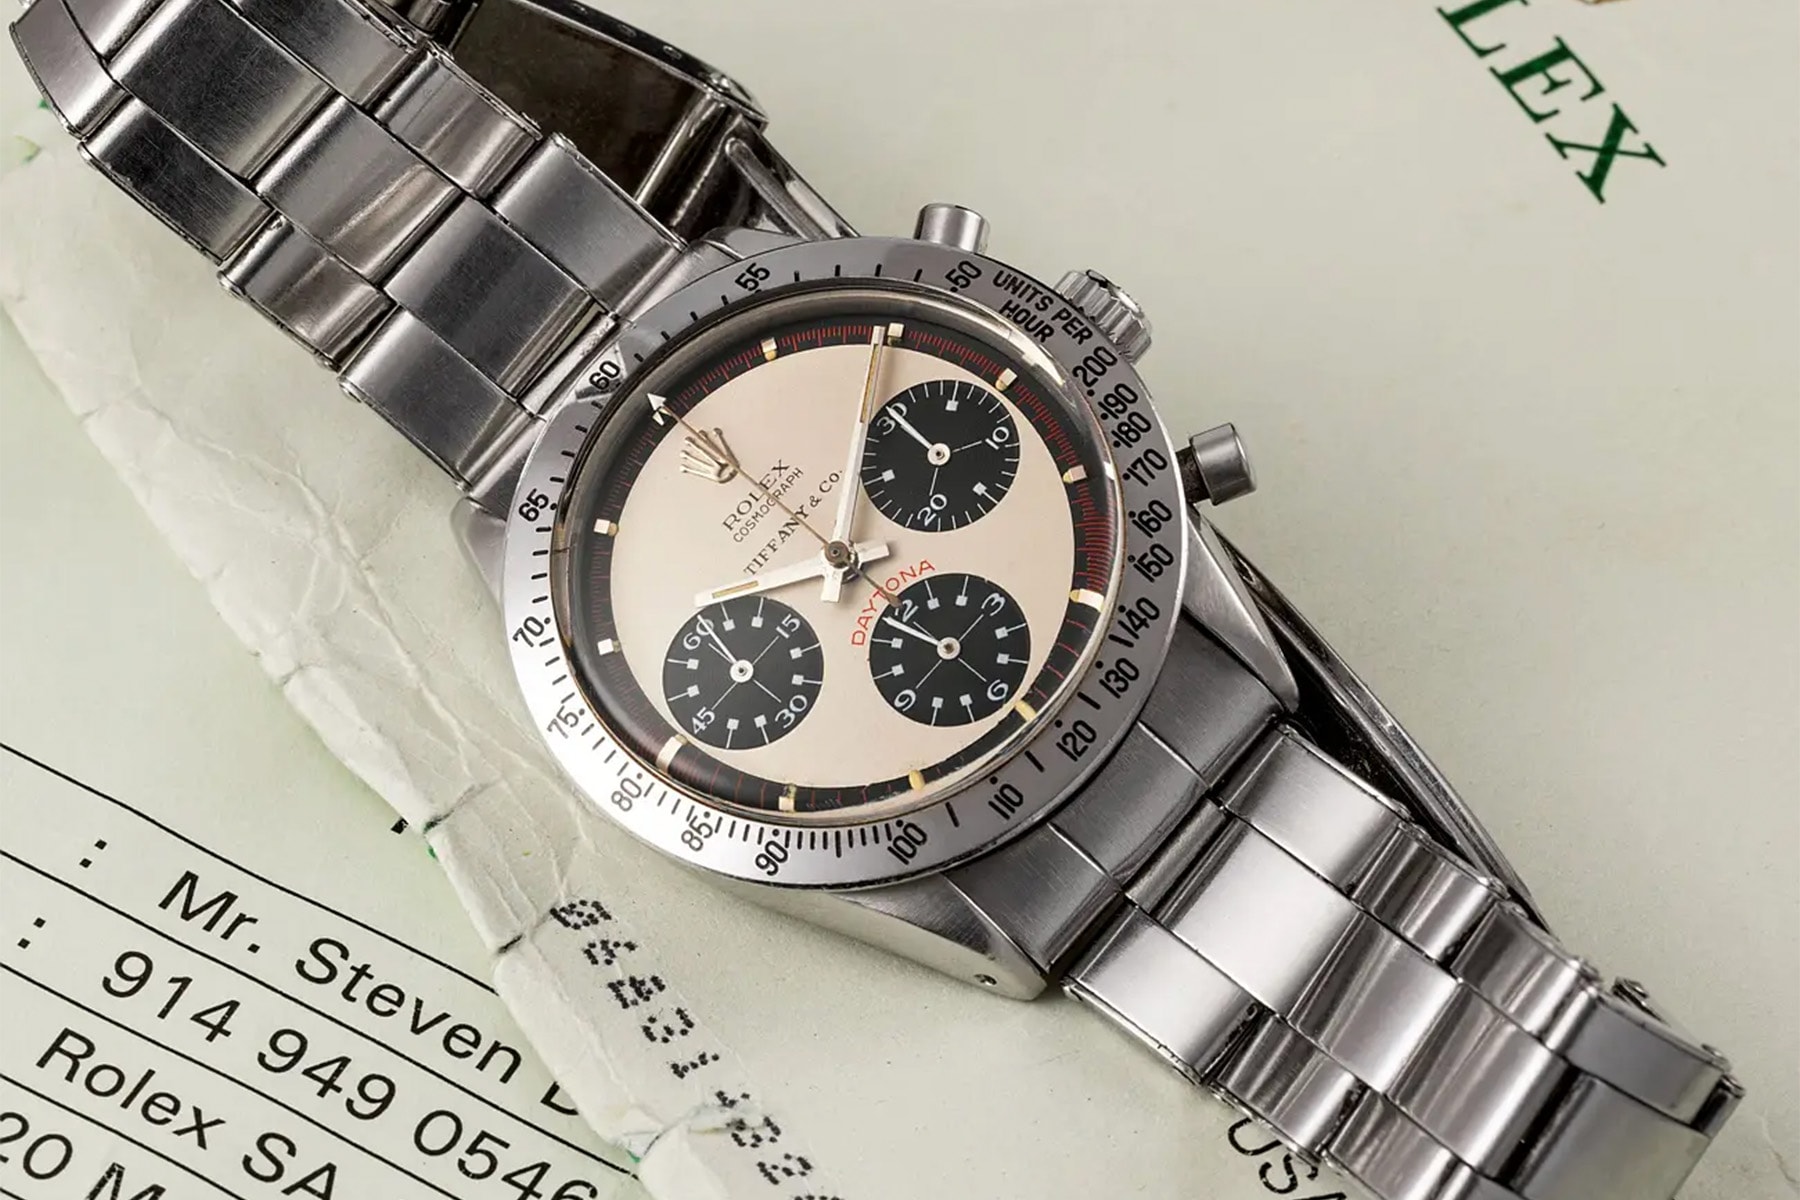 極罕有 Tiffany & Co. x Rolex Daytona「Paul Newman」錶款正式拍賣